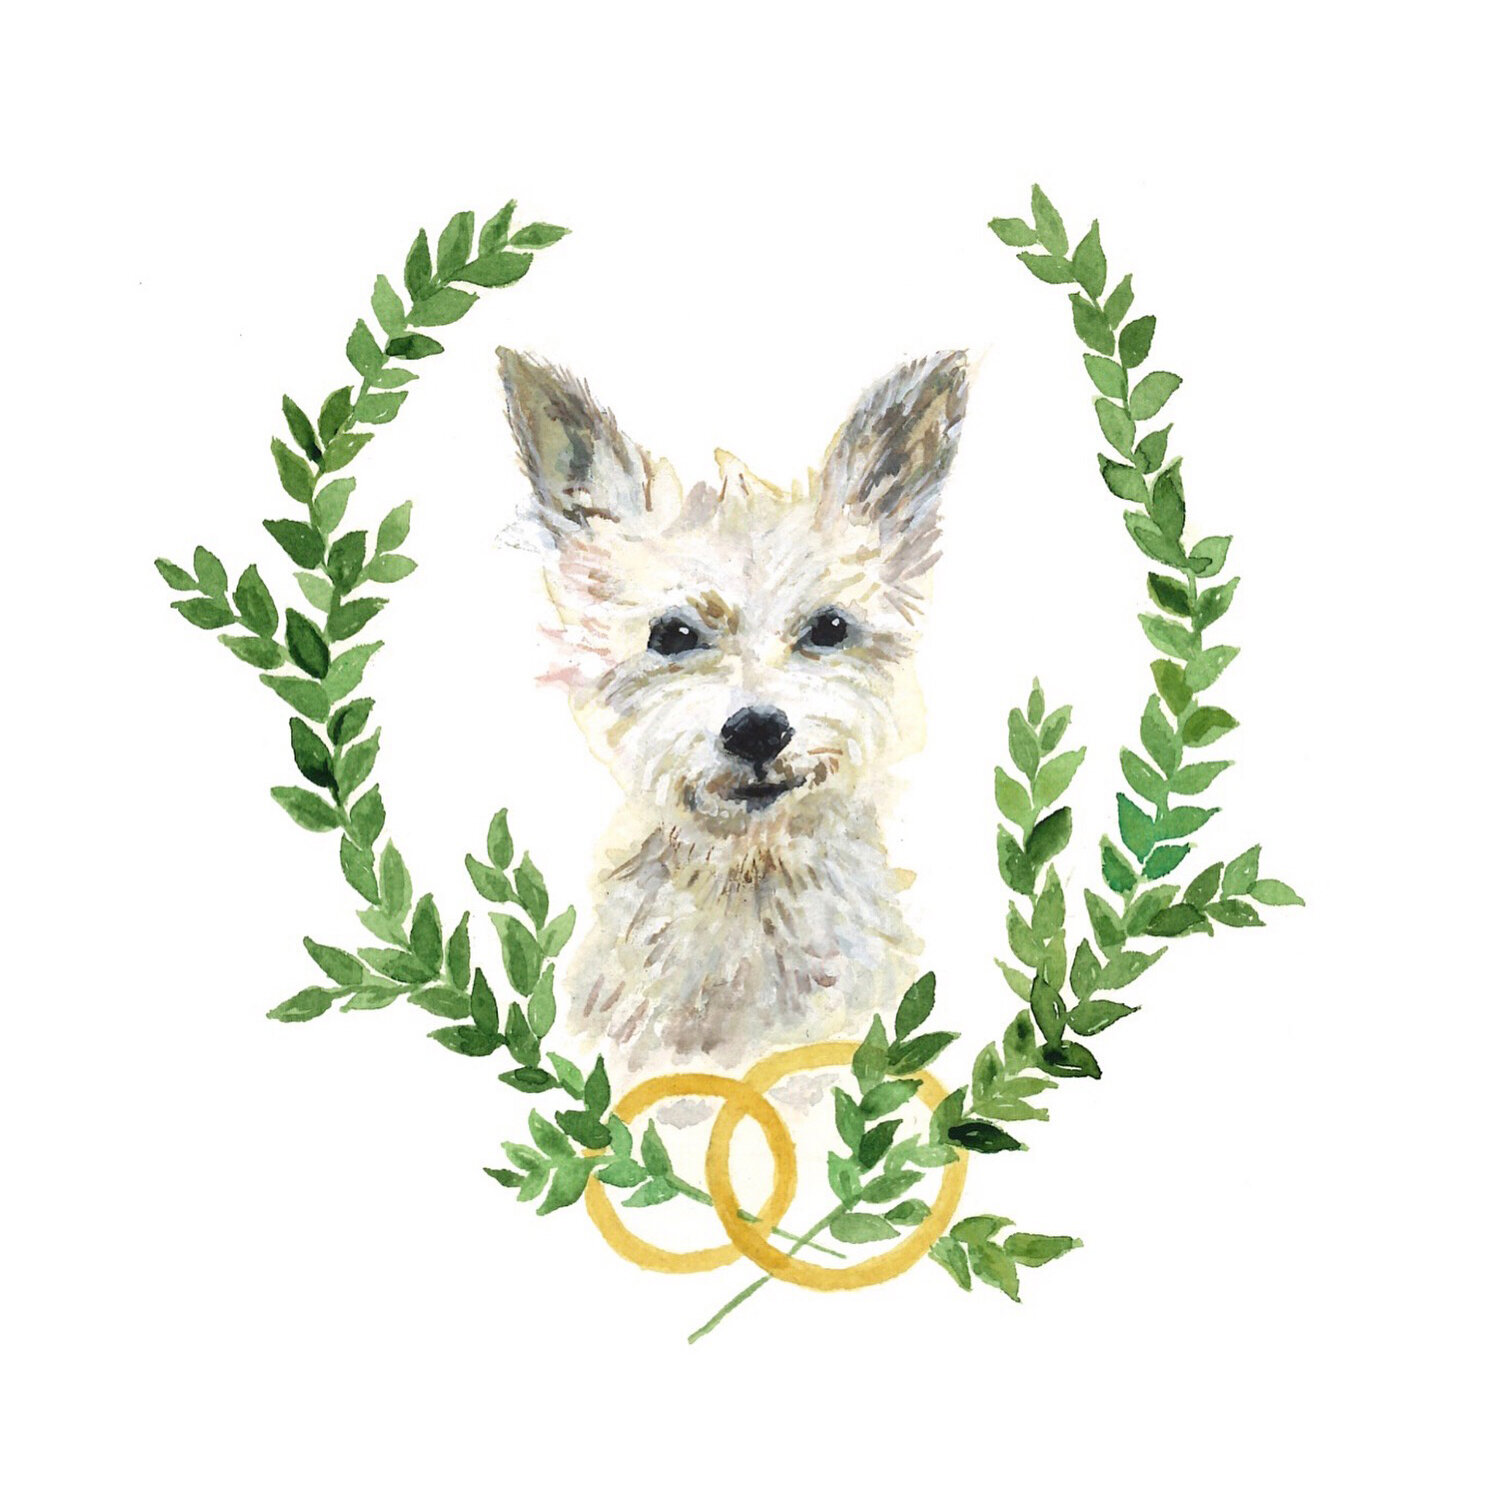 Illustrated watercolor wedding emblem